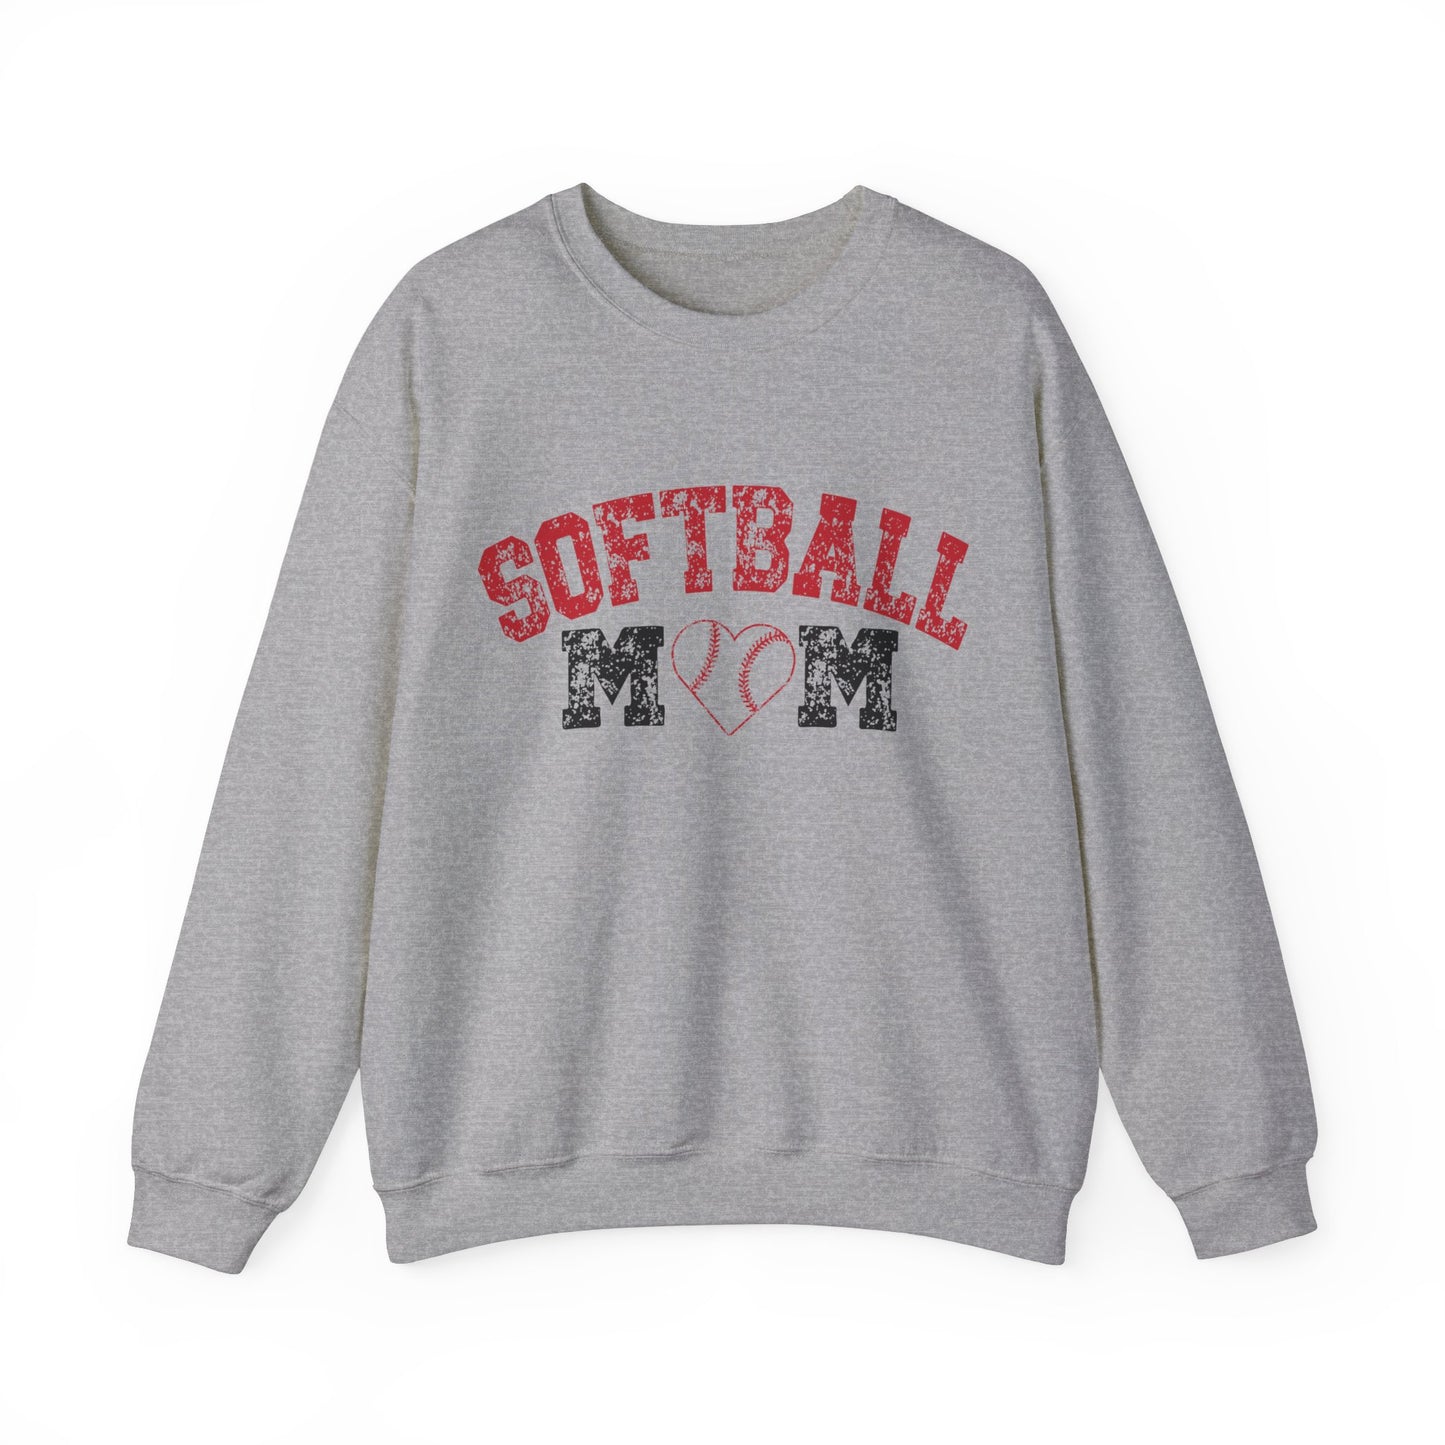 Softball Mom Women's Crewneck Sweatshirt